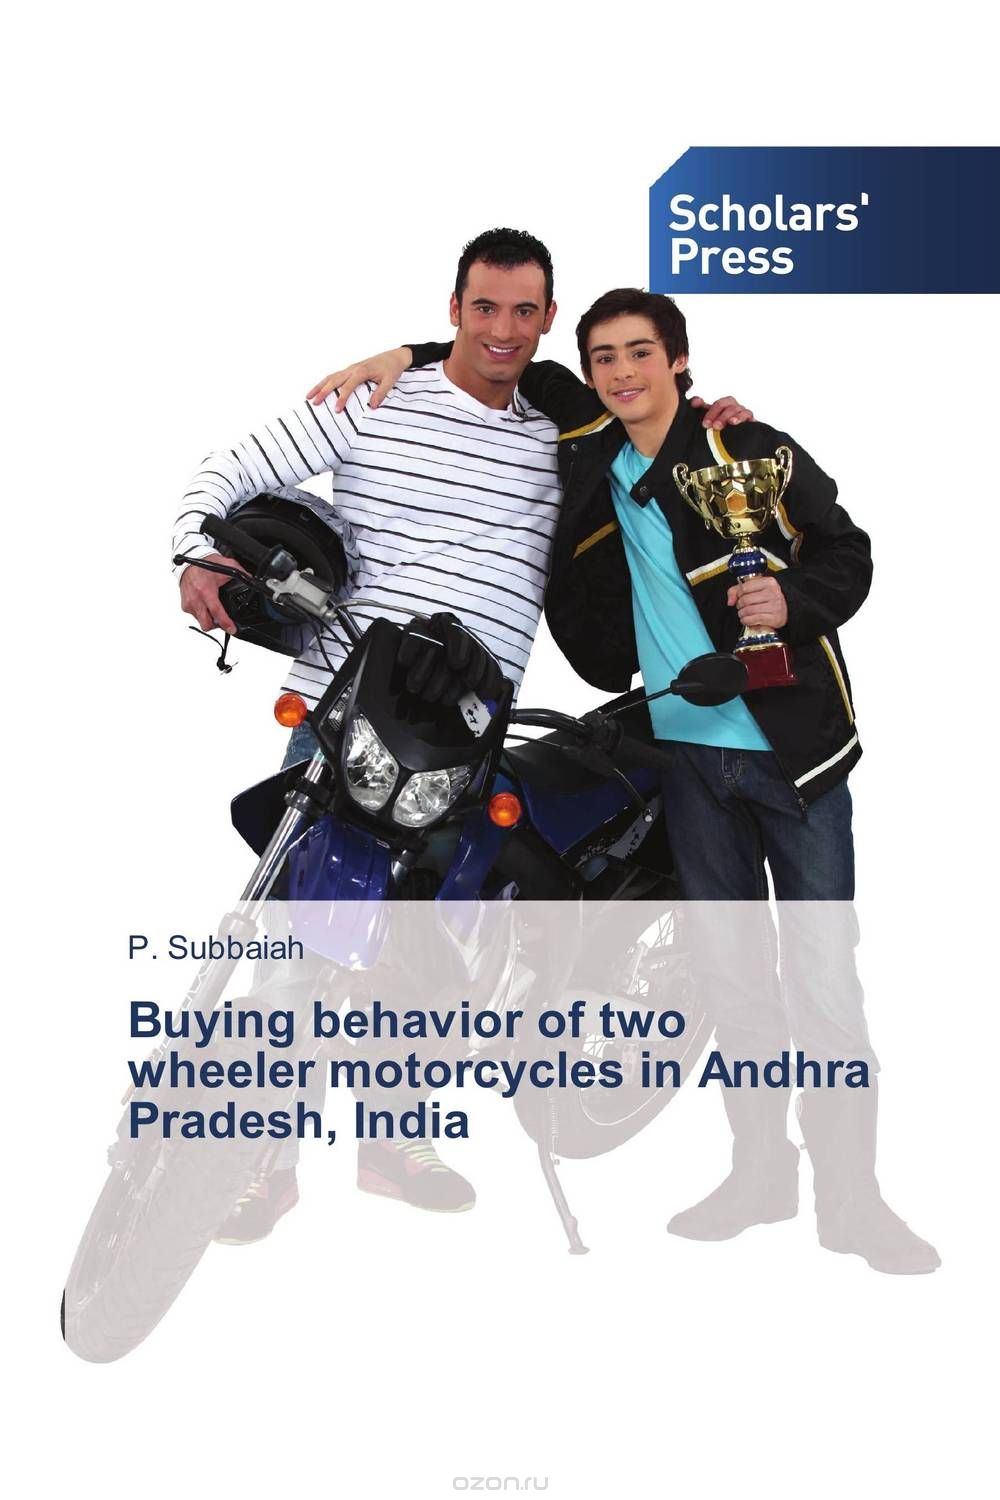 Скачать книгу "Buying behavior of two wheeler motorcycles in Andhra Pradesh, India"